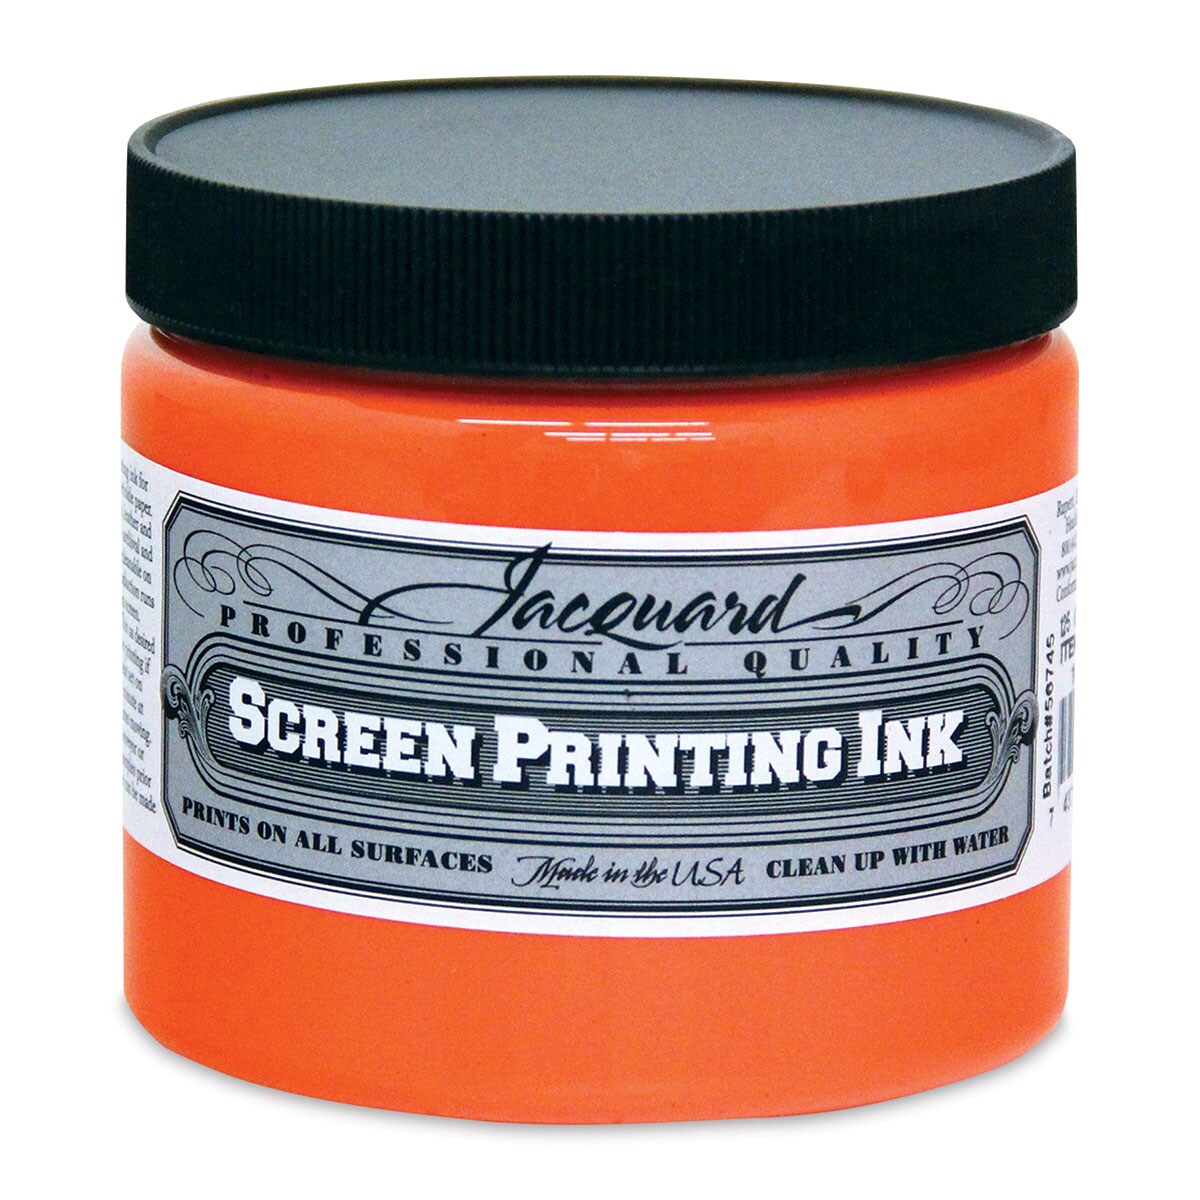 Jacquard Screen Printing Ink - Opaque Orange, 16 oz